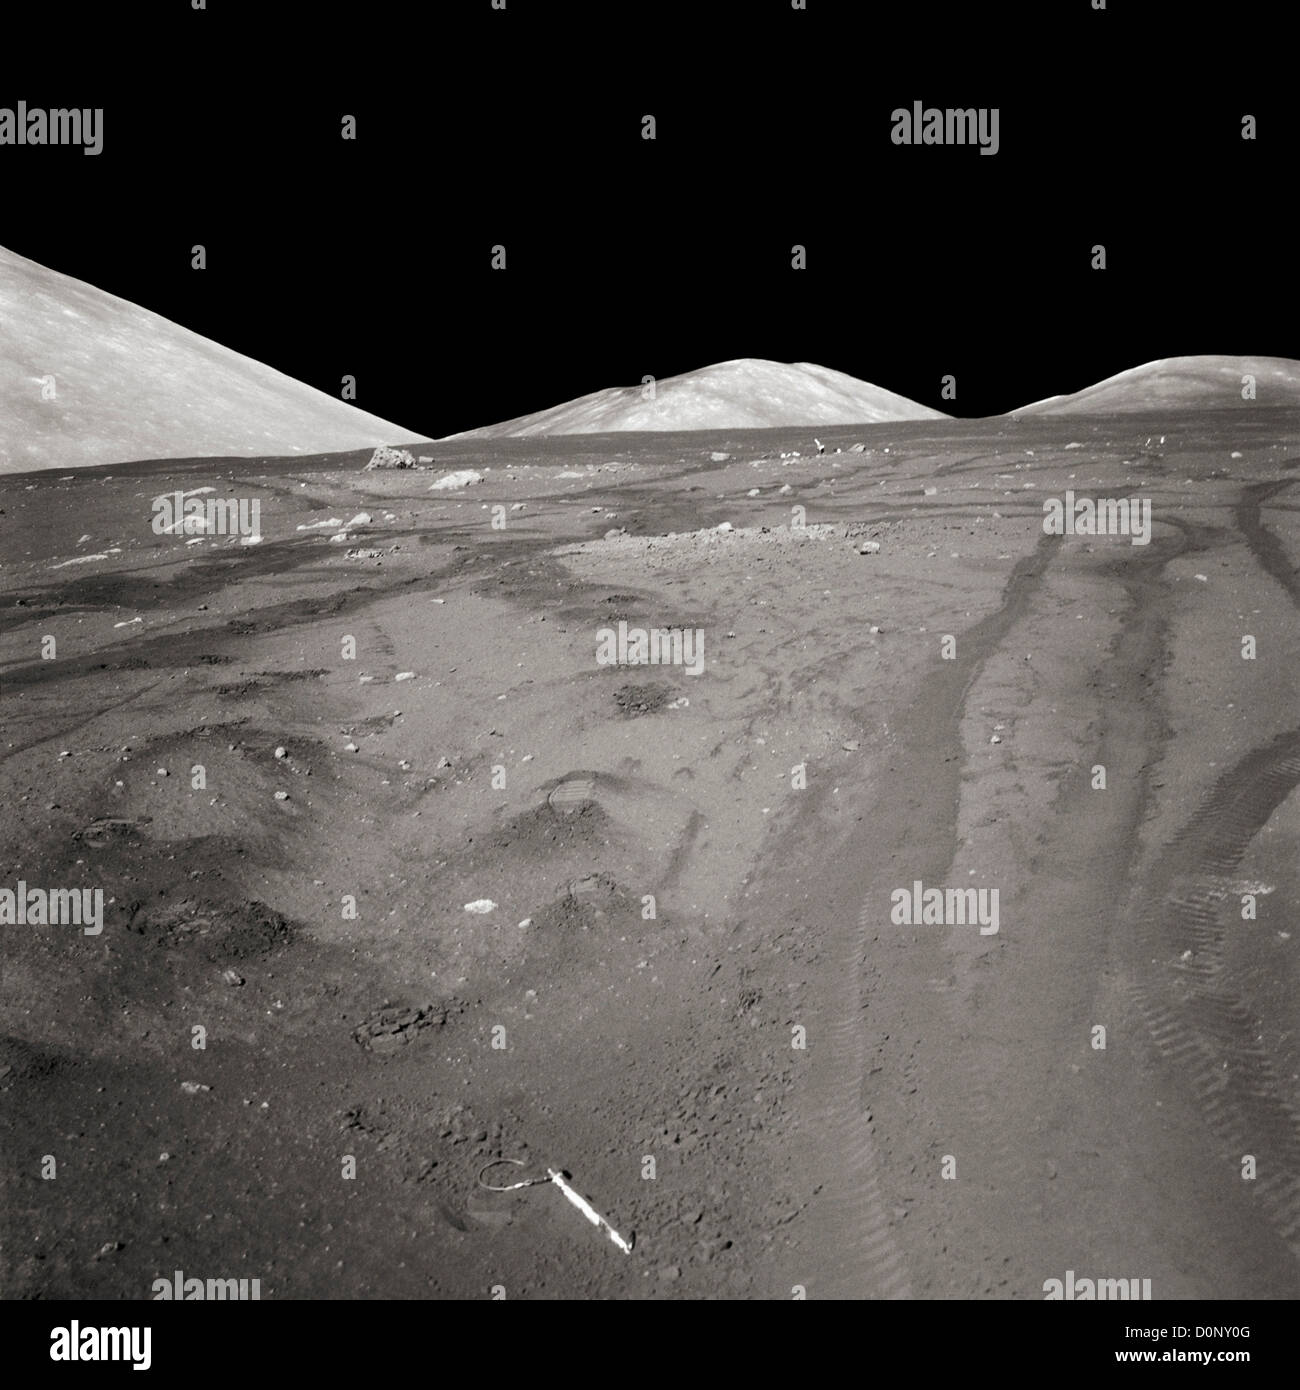 Apollo 17 - Dune Buggy Tracks on the Moon Stock Photo